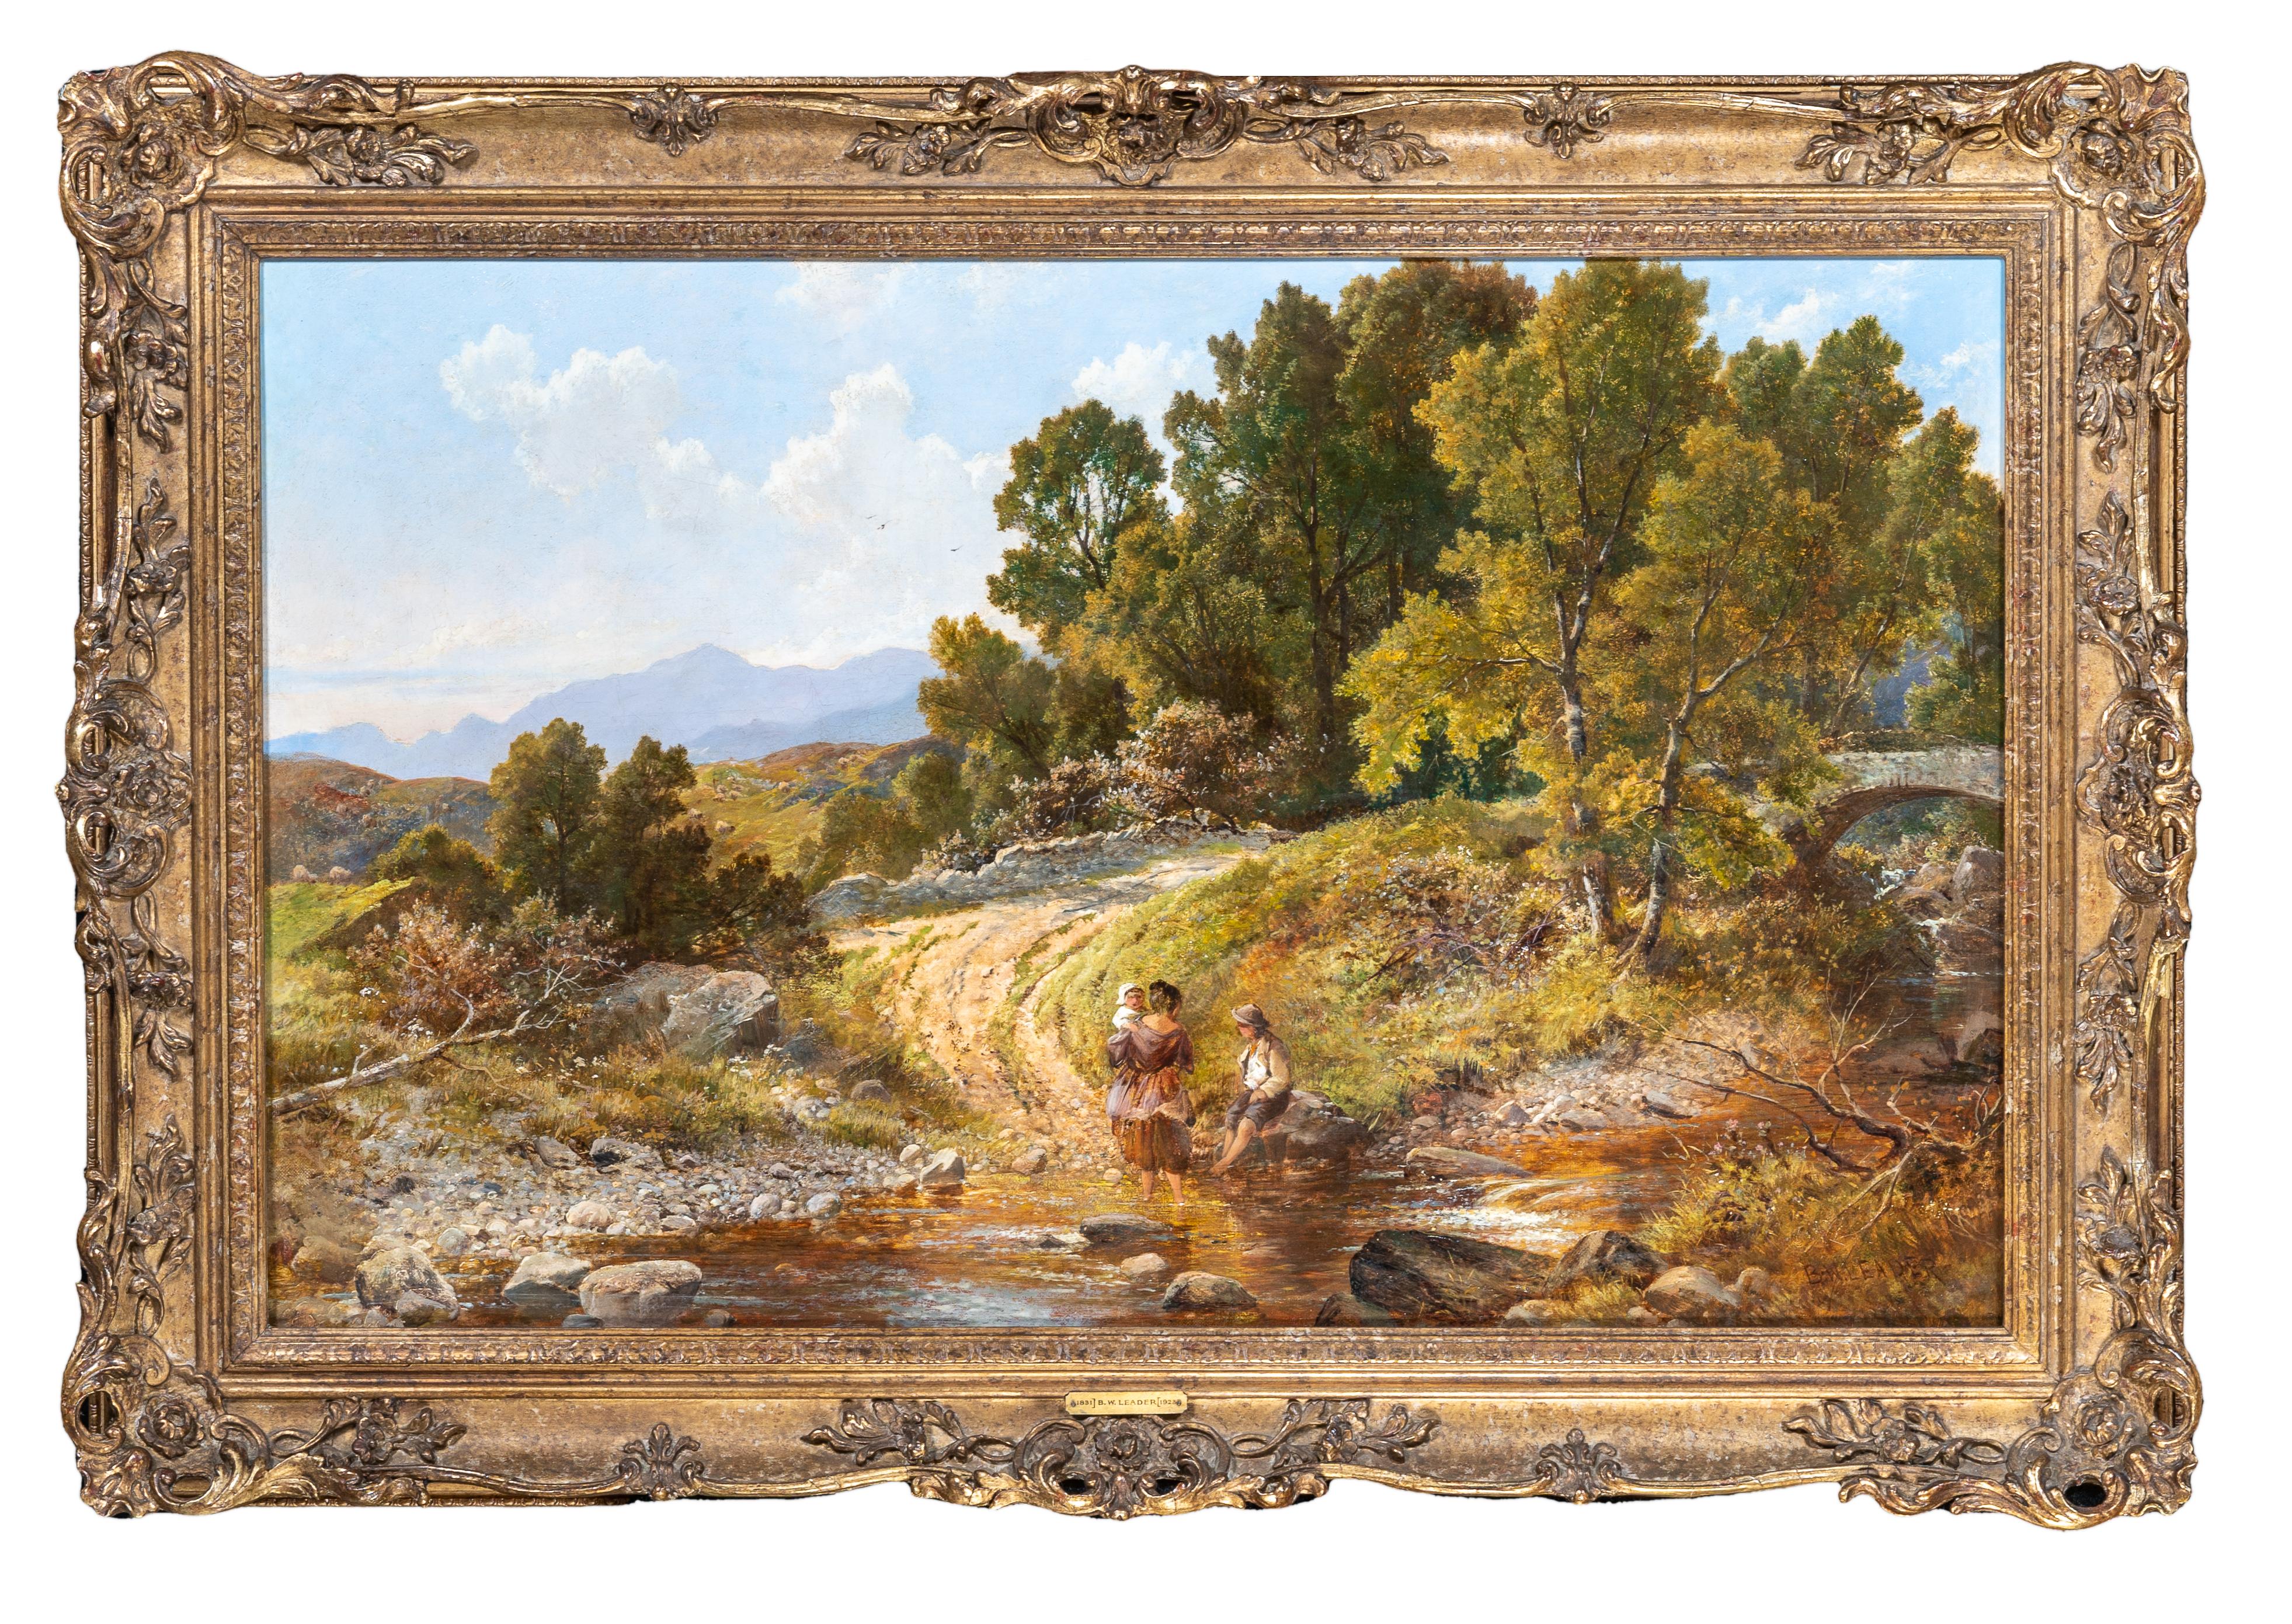 Benjamin Williams Leader Landscape Painting - 'Wading in the River' 19th century landscape painting of figures, greenery